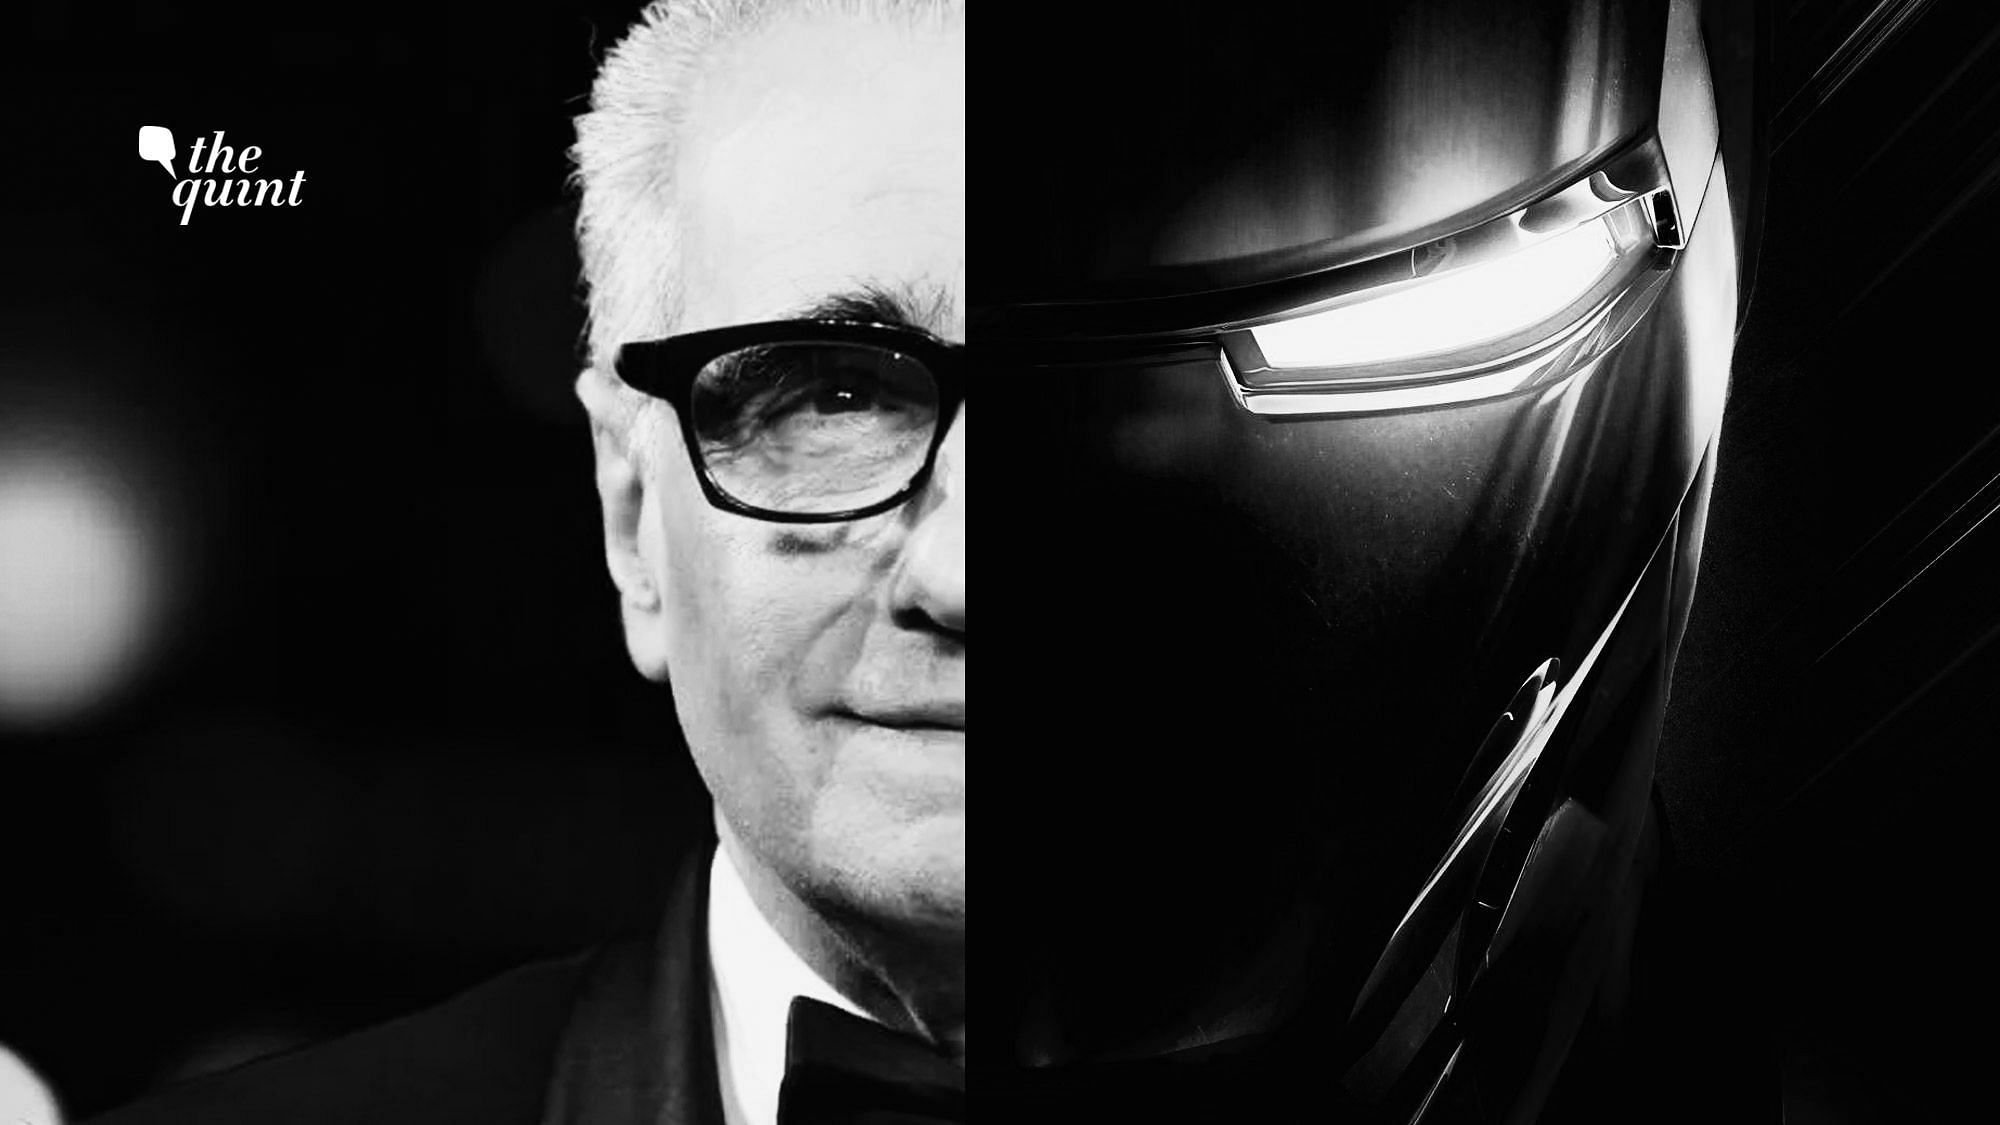 A superhero movie buff’s letter to Martin Scorsese.